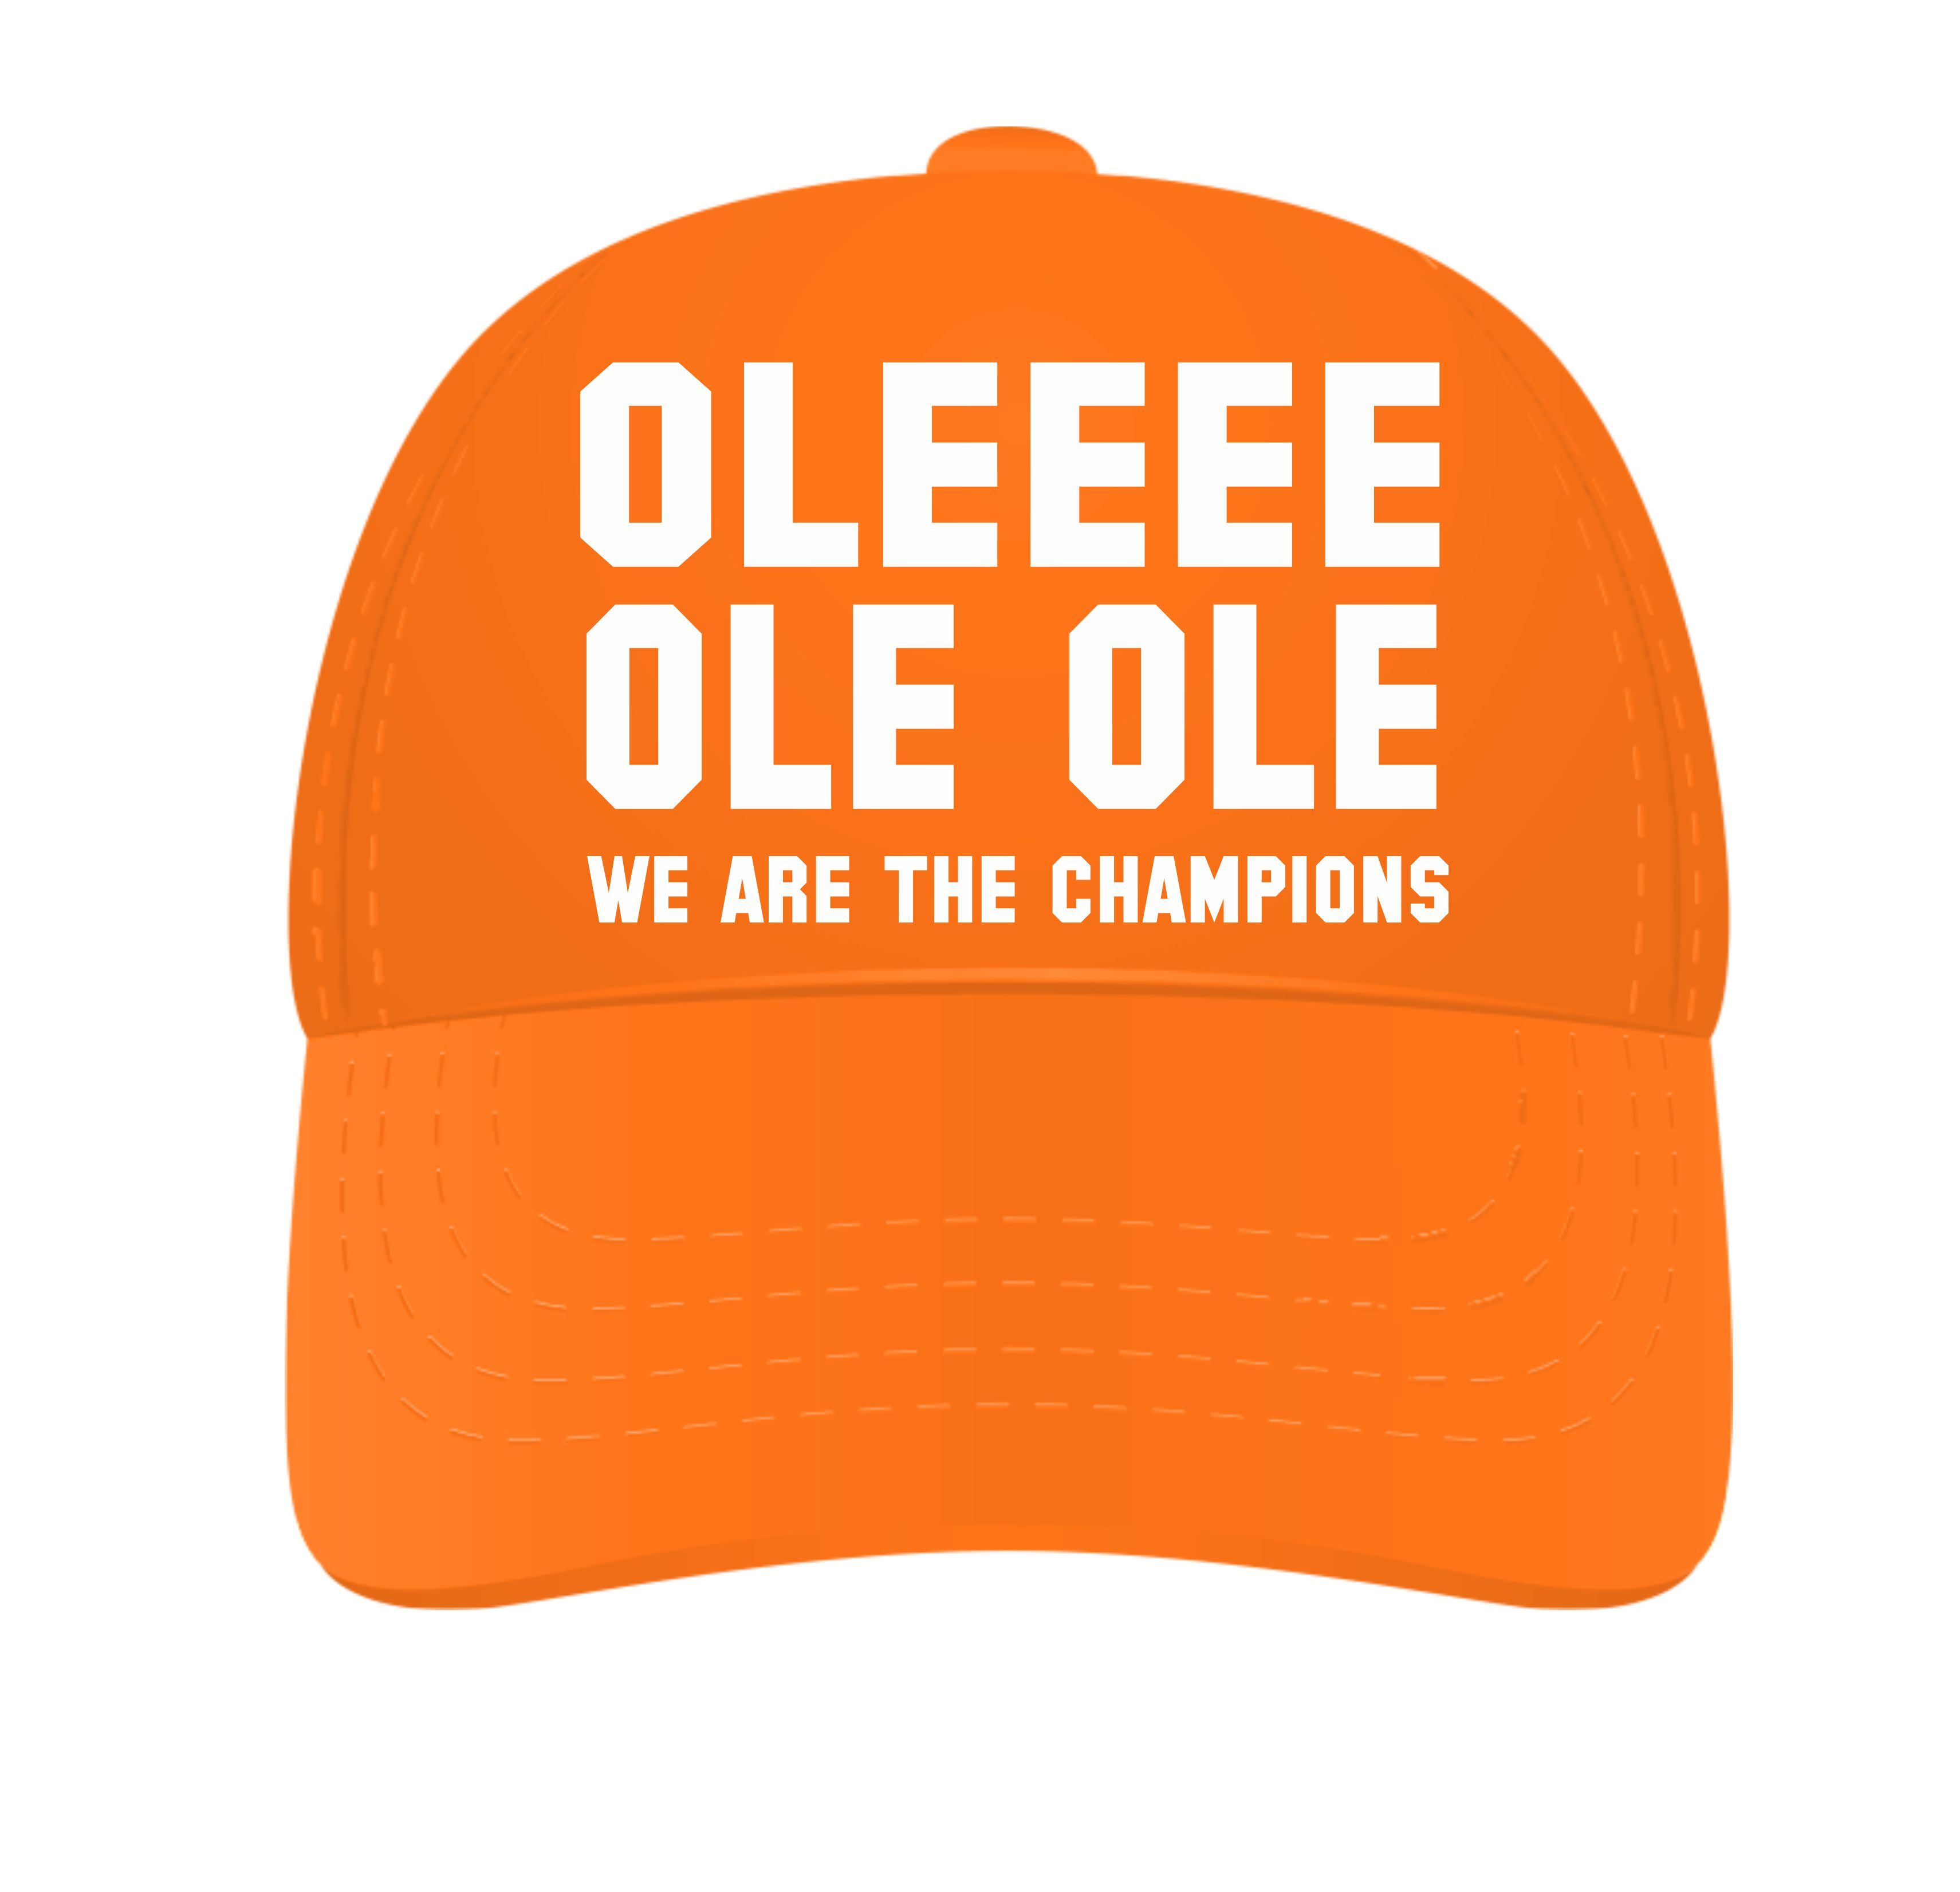 Oranje Pet oleee ole ole we are the champions